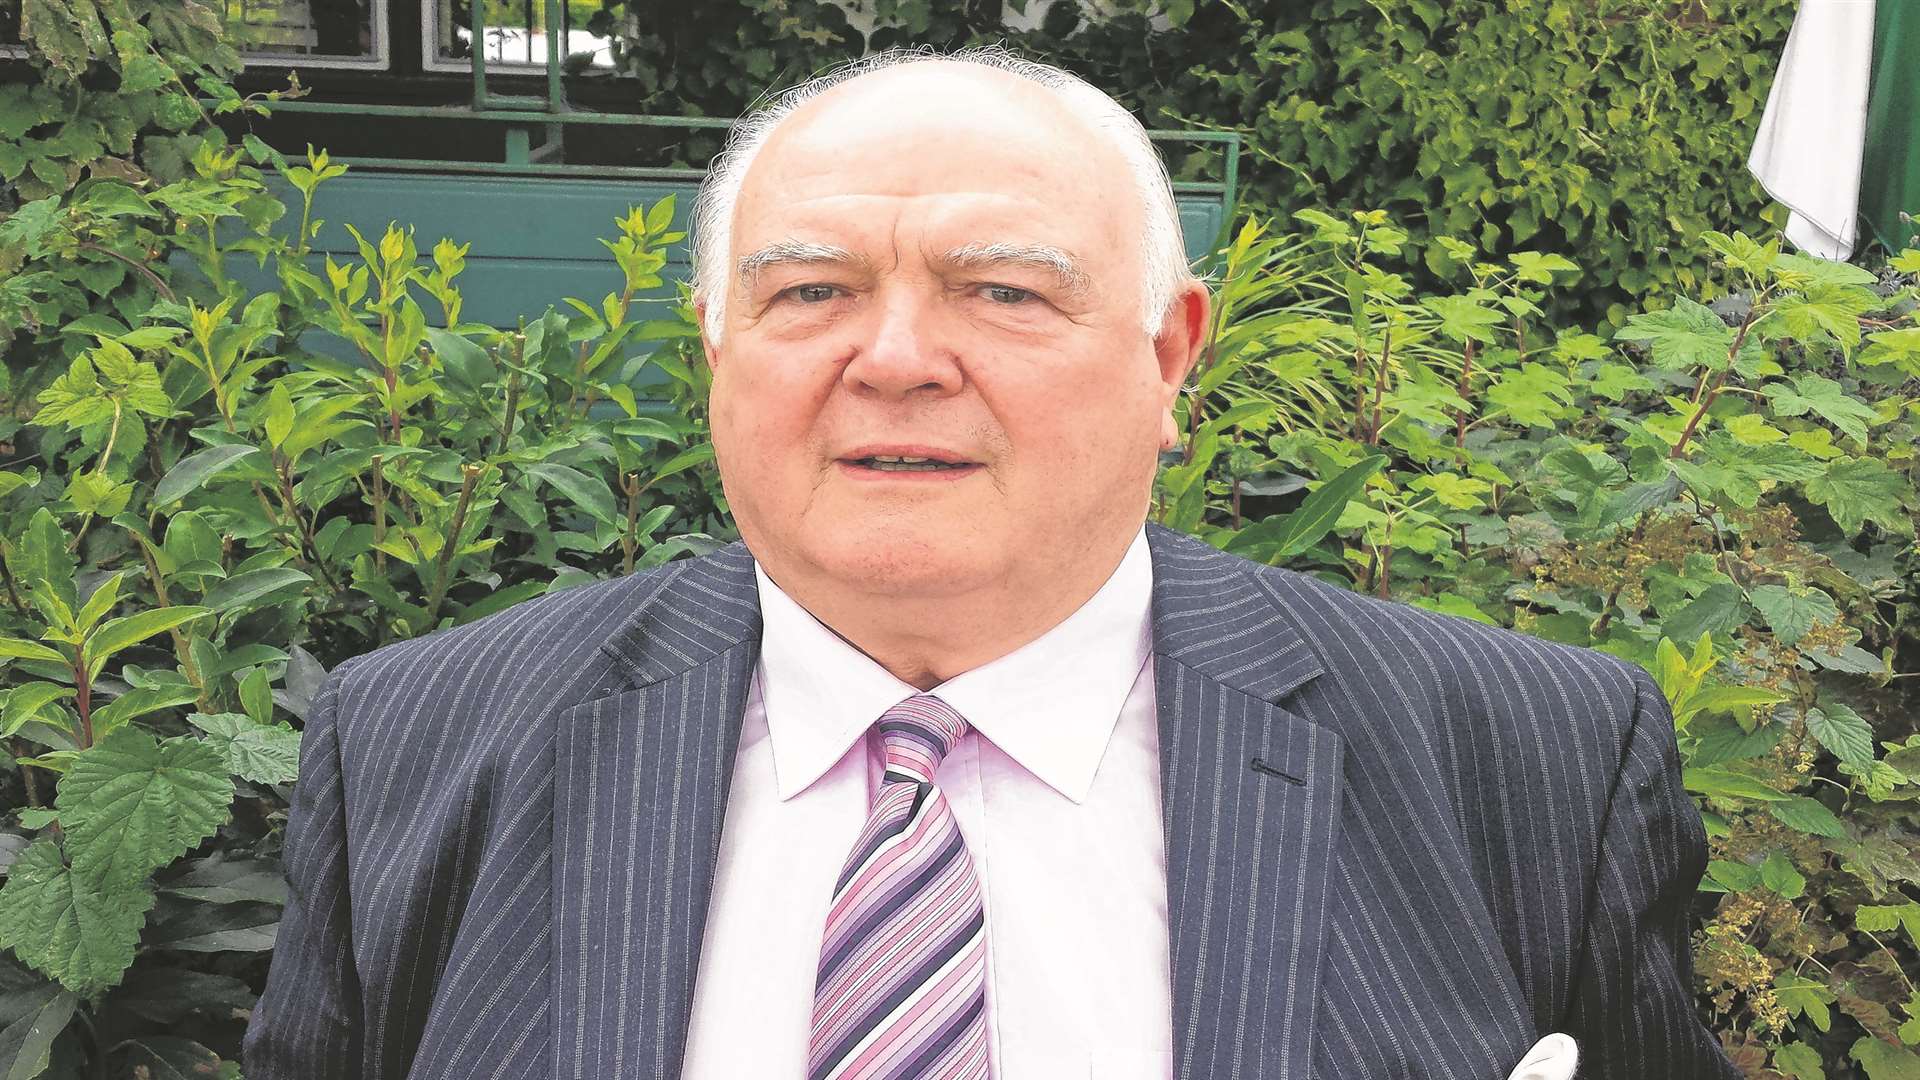 Council leader Gerry Clarkson